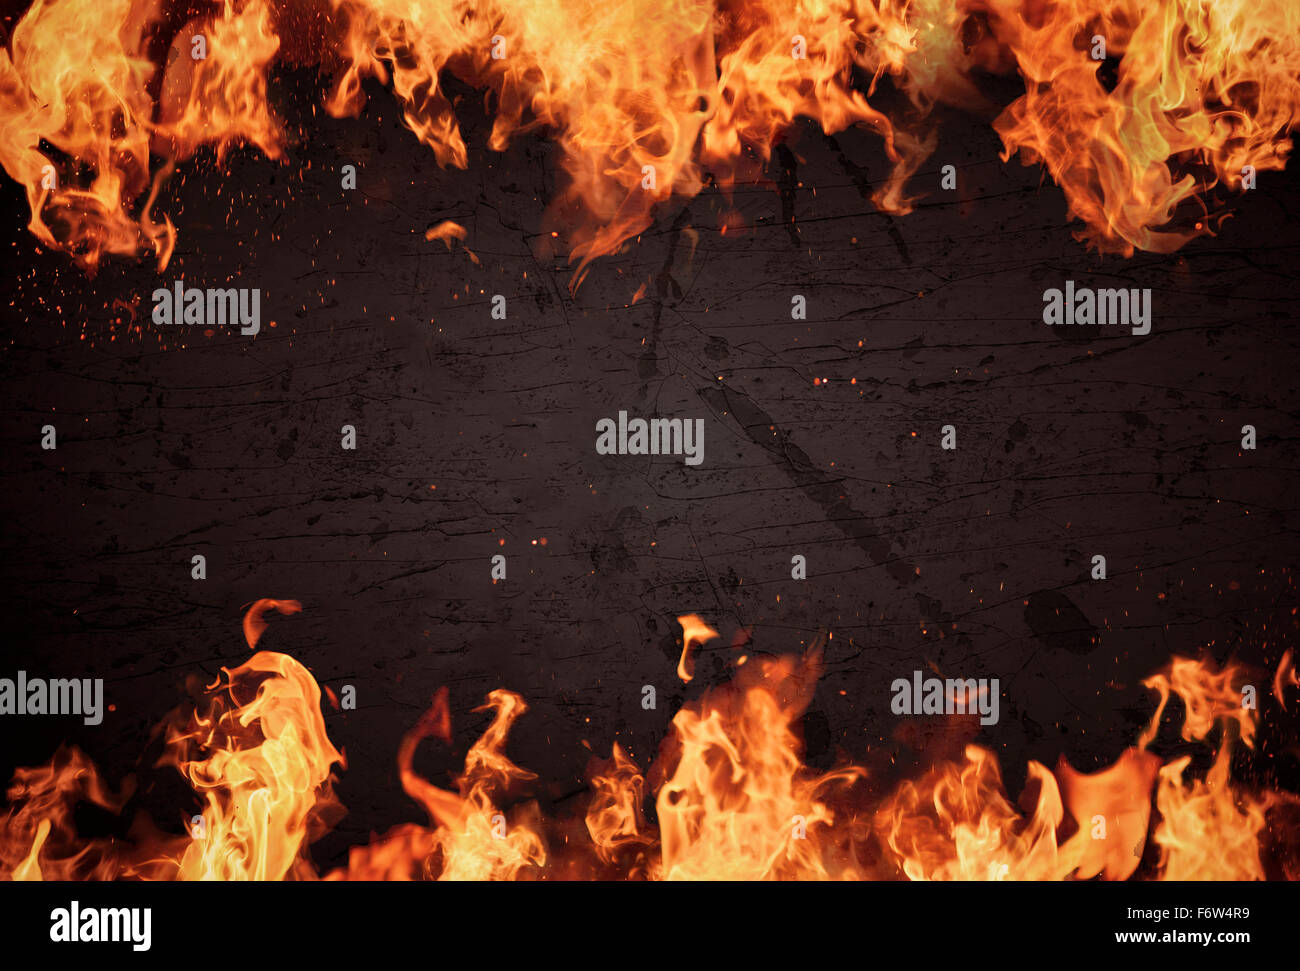 Blazing flames over dark background Stock Photo